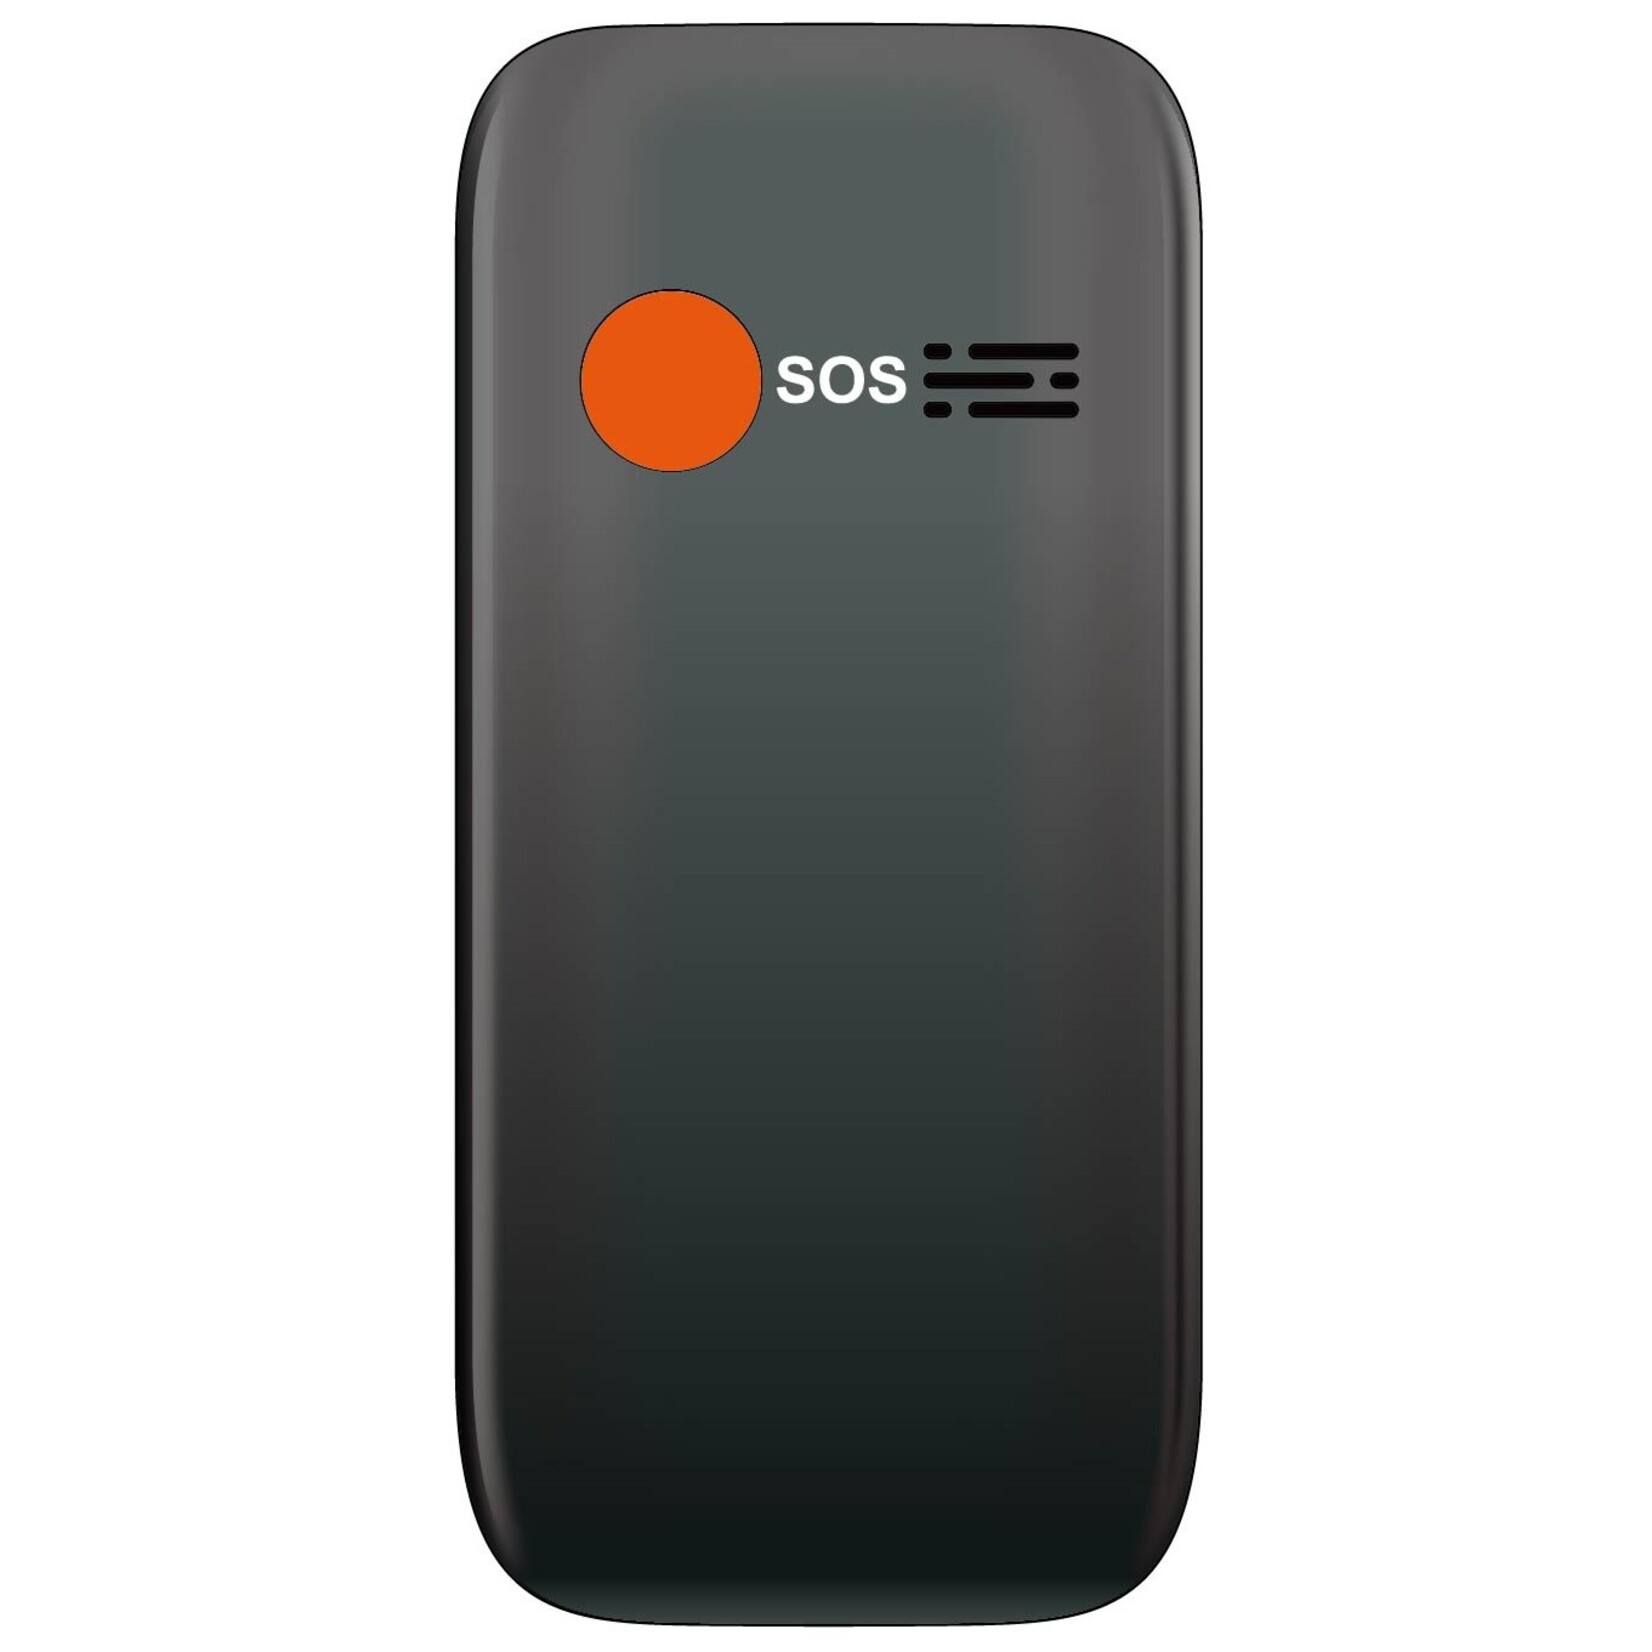 Denver Denver BAS-18300M Mobiele Telefoon voor Senioren – GSM met Grote Toetsen